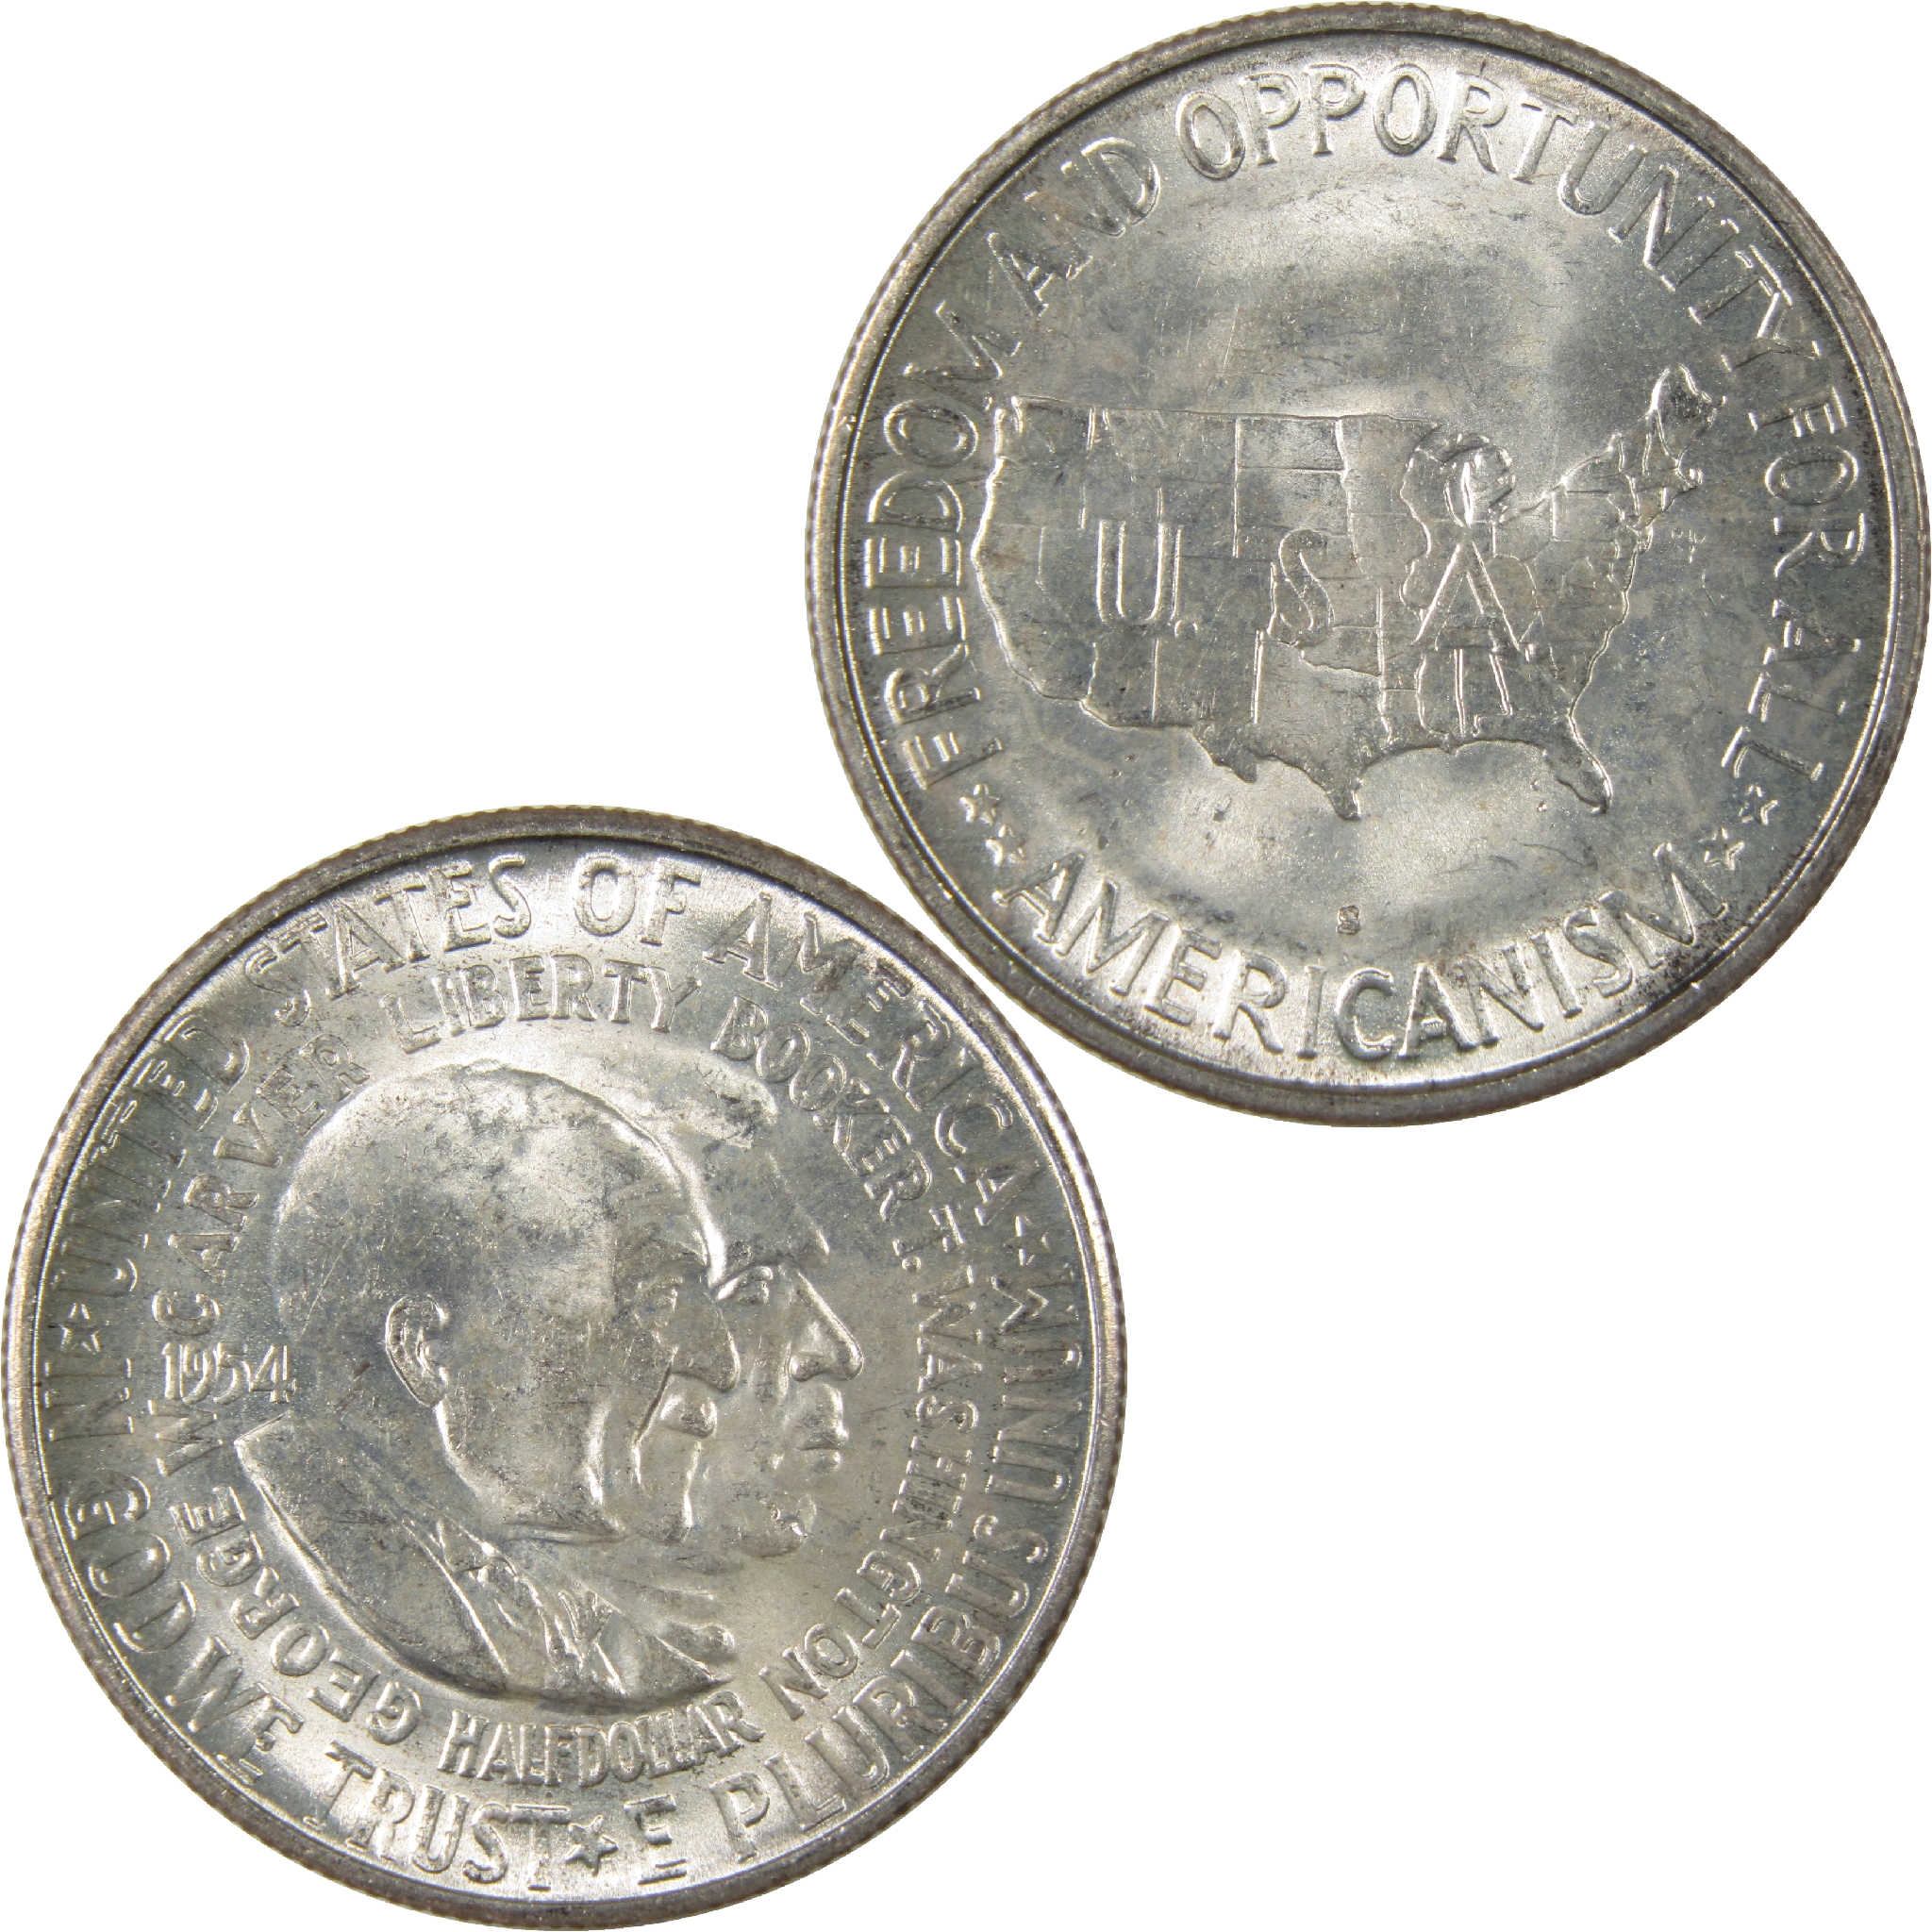 Washington-Carver Half Dollar 1954 S Uncirculated Silver 50c Coin